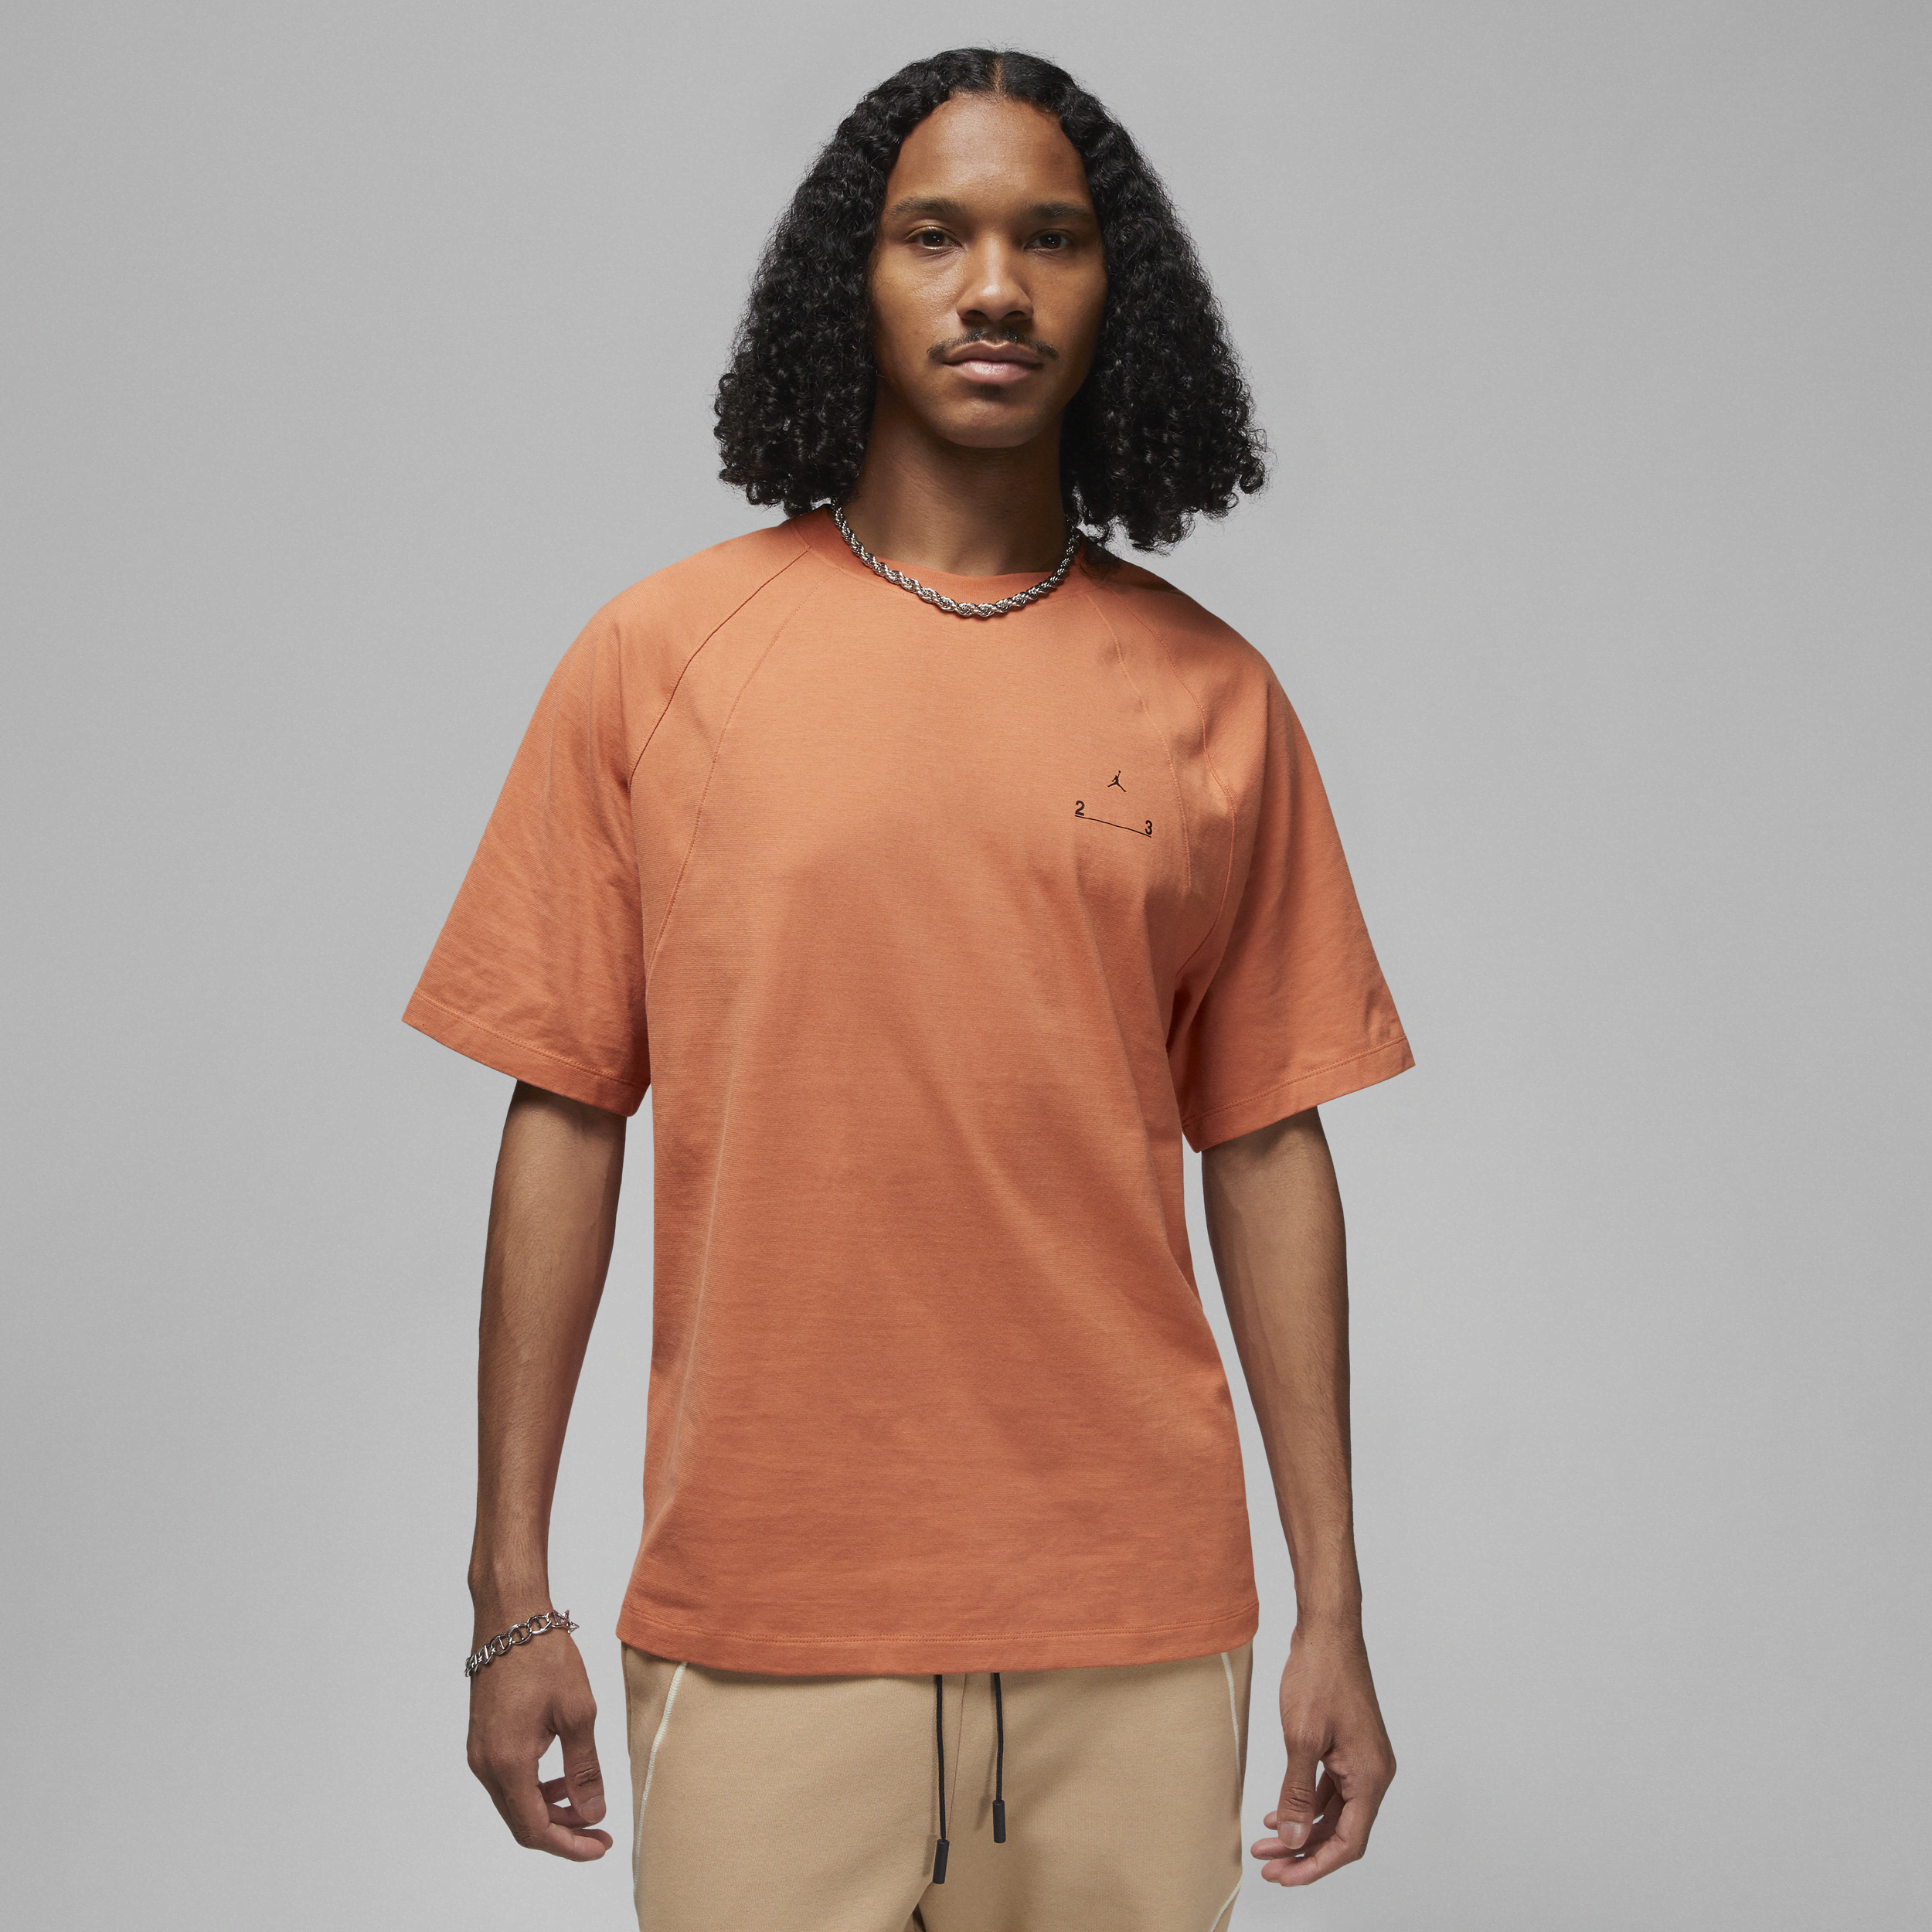 Jordan 23 Engineered Camiseta - Hombre - Naranja